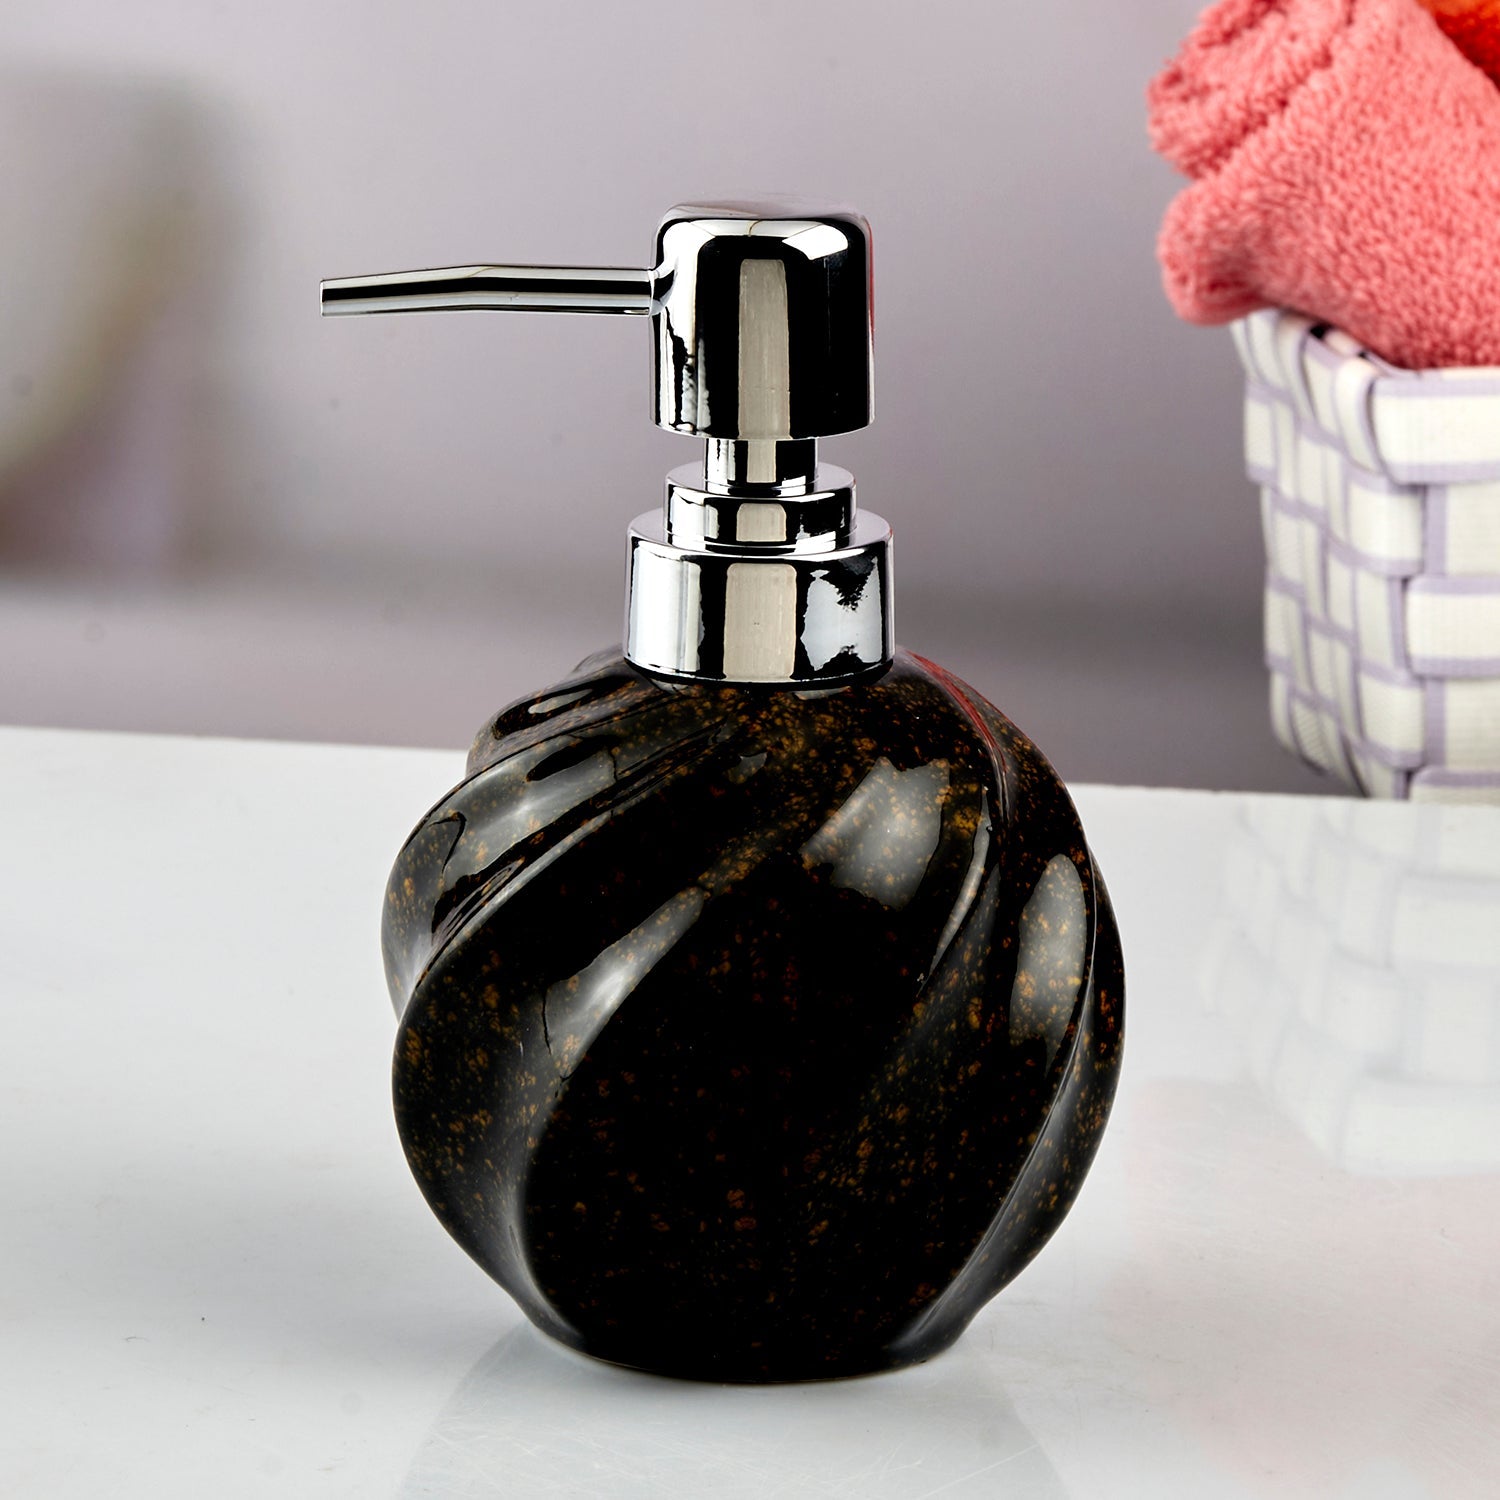 Ceramic Soap Dispenser handwash Pump for Bathroom, Set of 1, Black (10742)